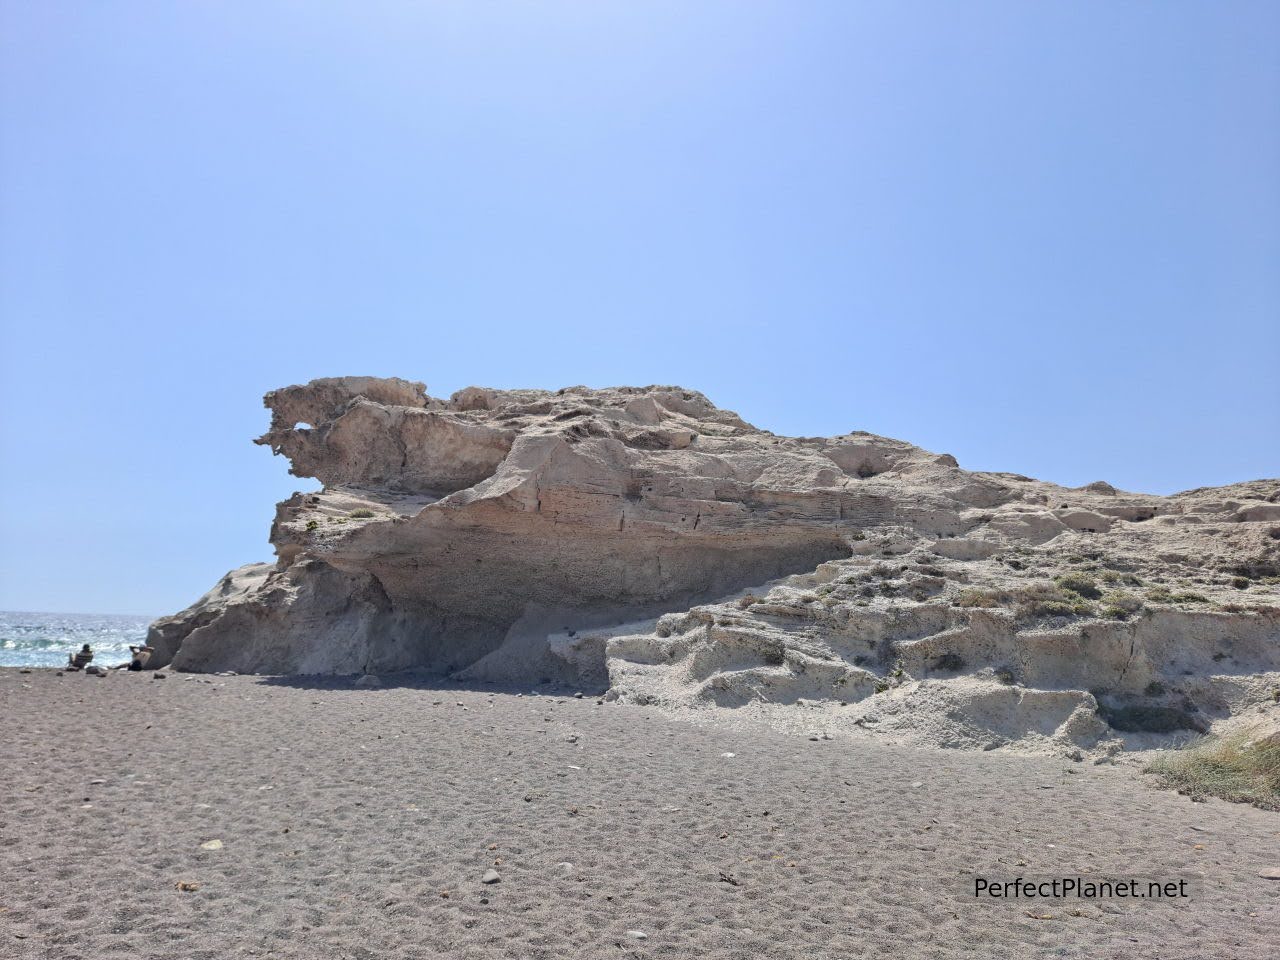 Fossil dune